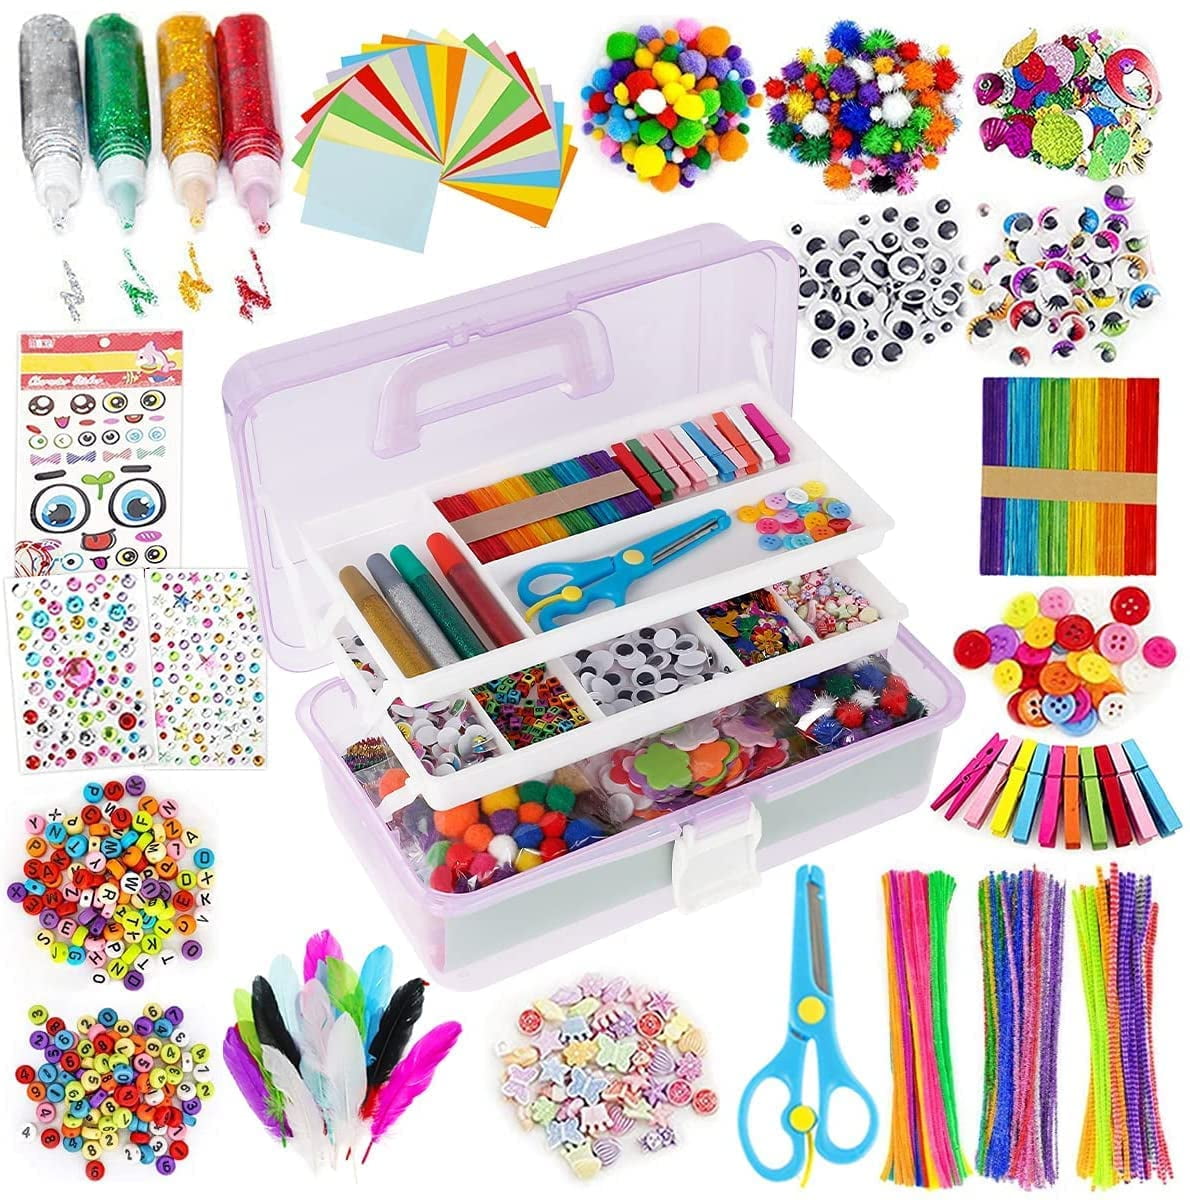 Zenacolor Craft Kit - Crafts Art Set 1000+ Pieces - Arts Supplies- Gift